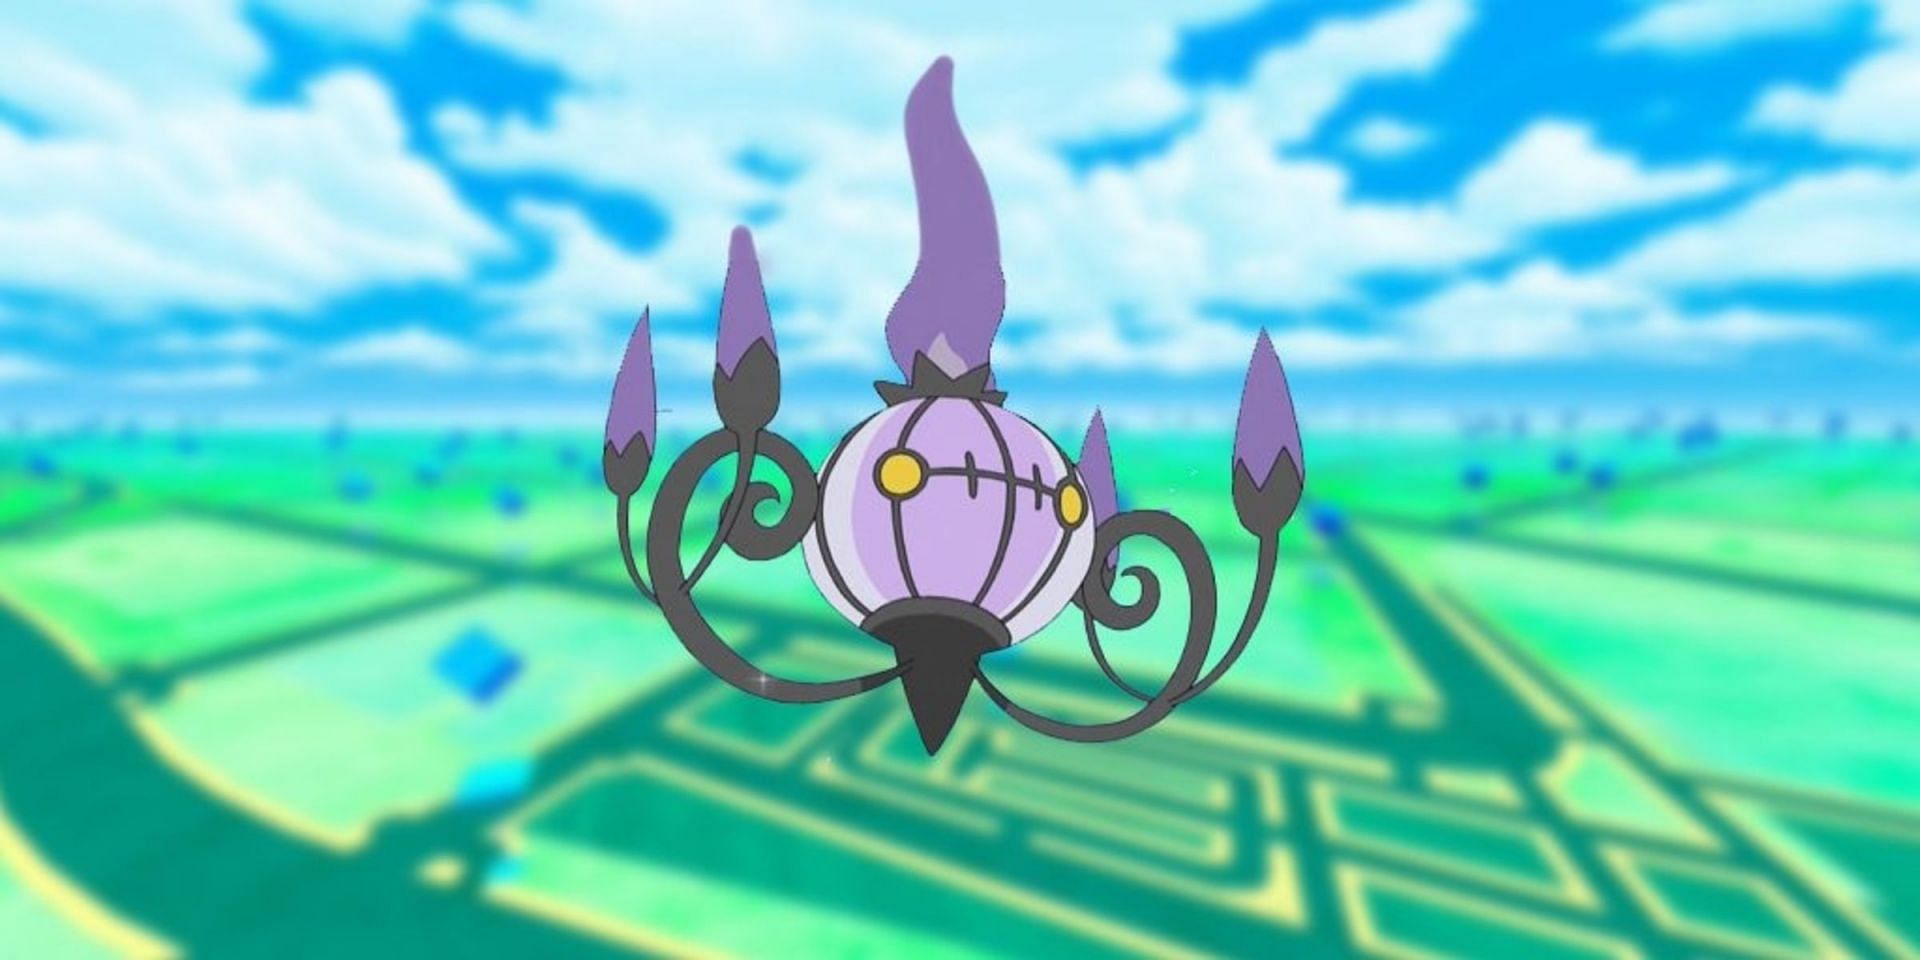 Chandelure is a Ghost/Fire-type Pokemon from the Unova region (Image via Niantic)